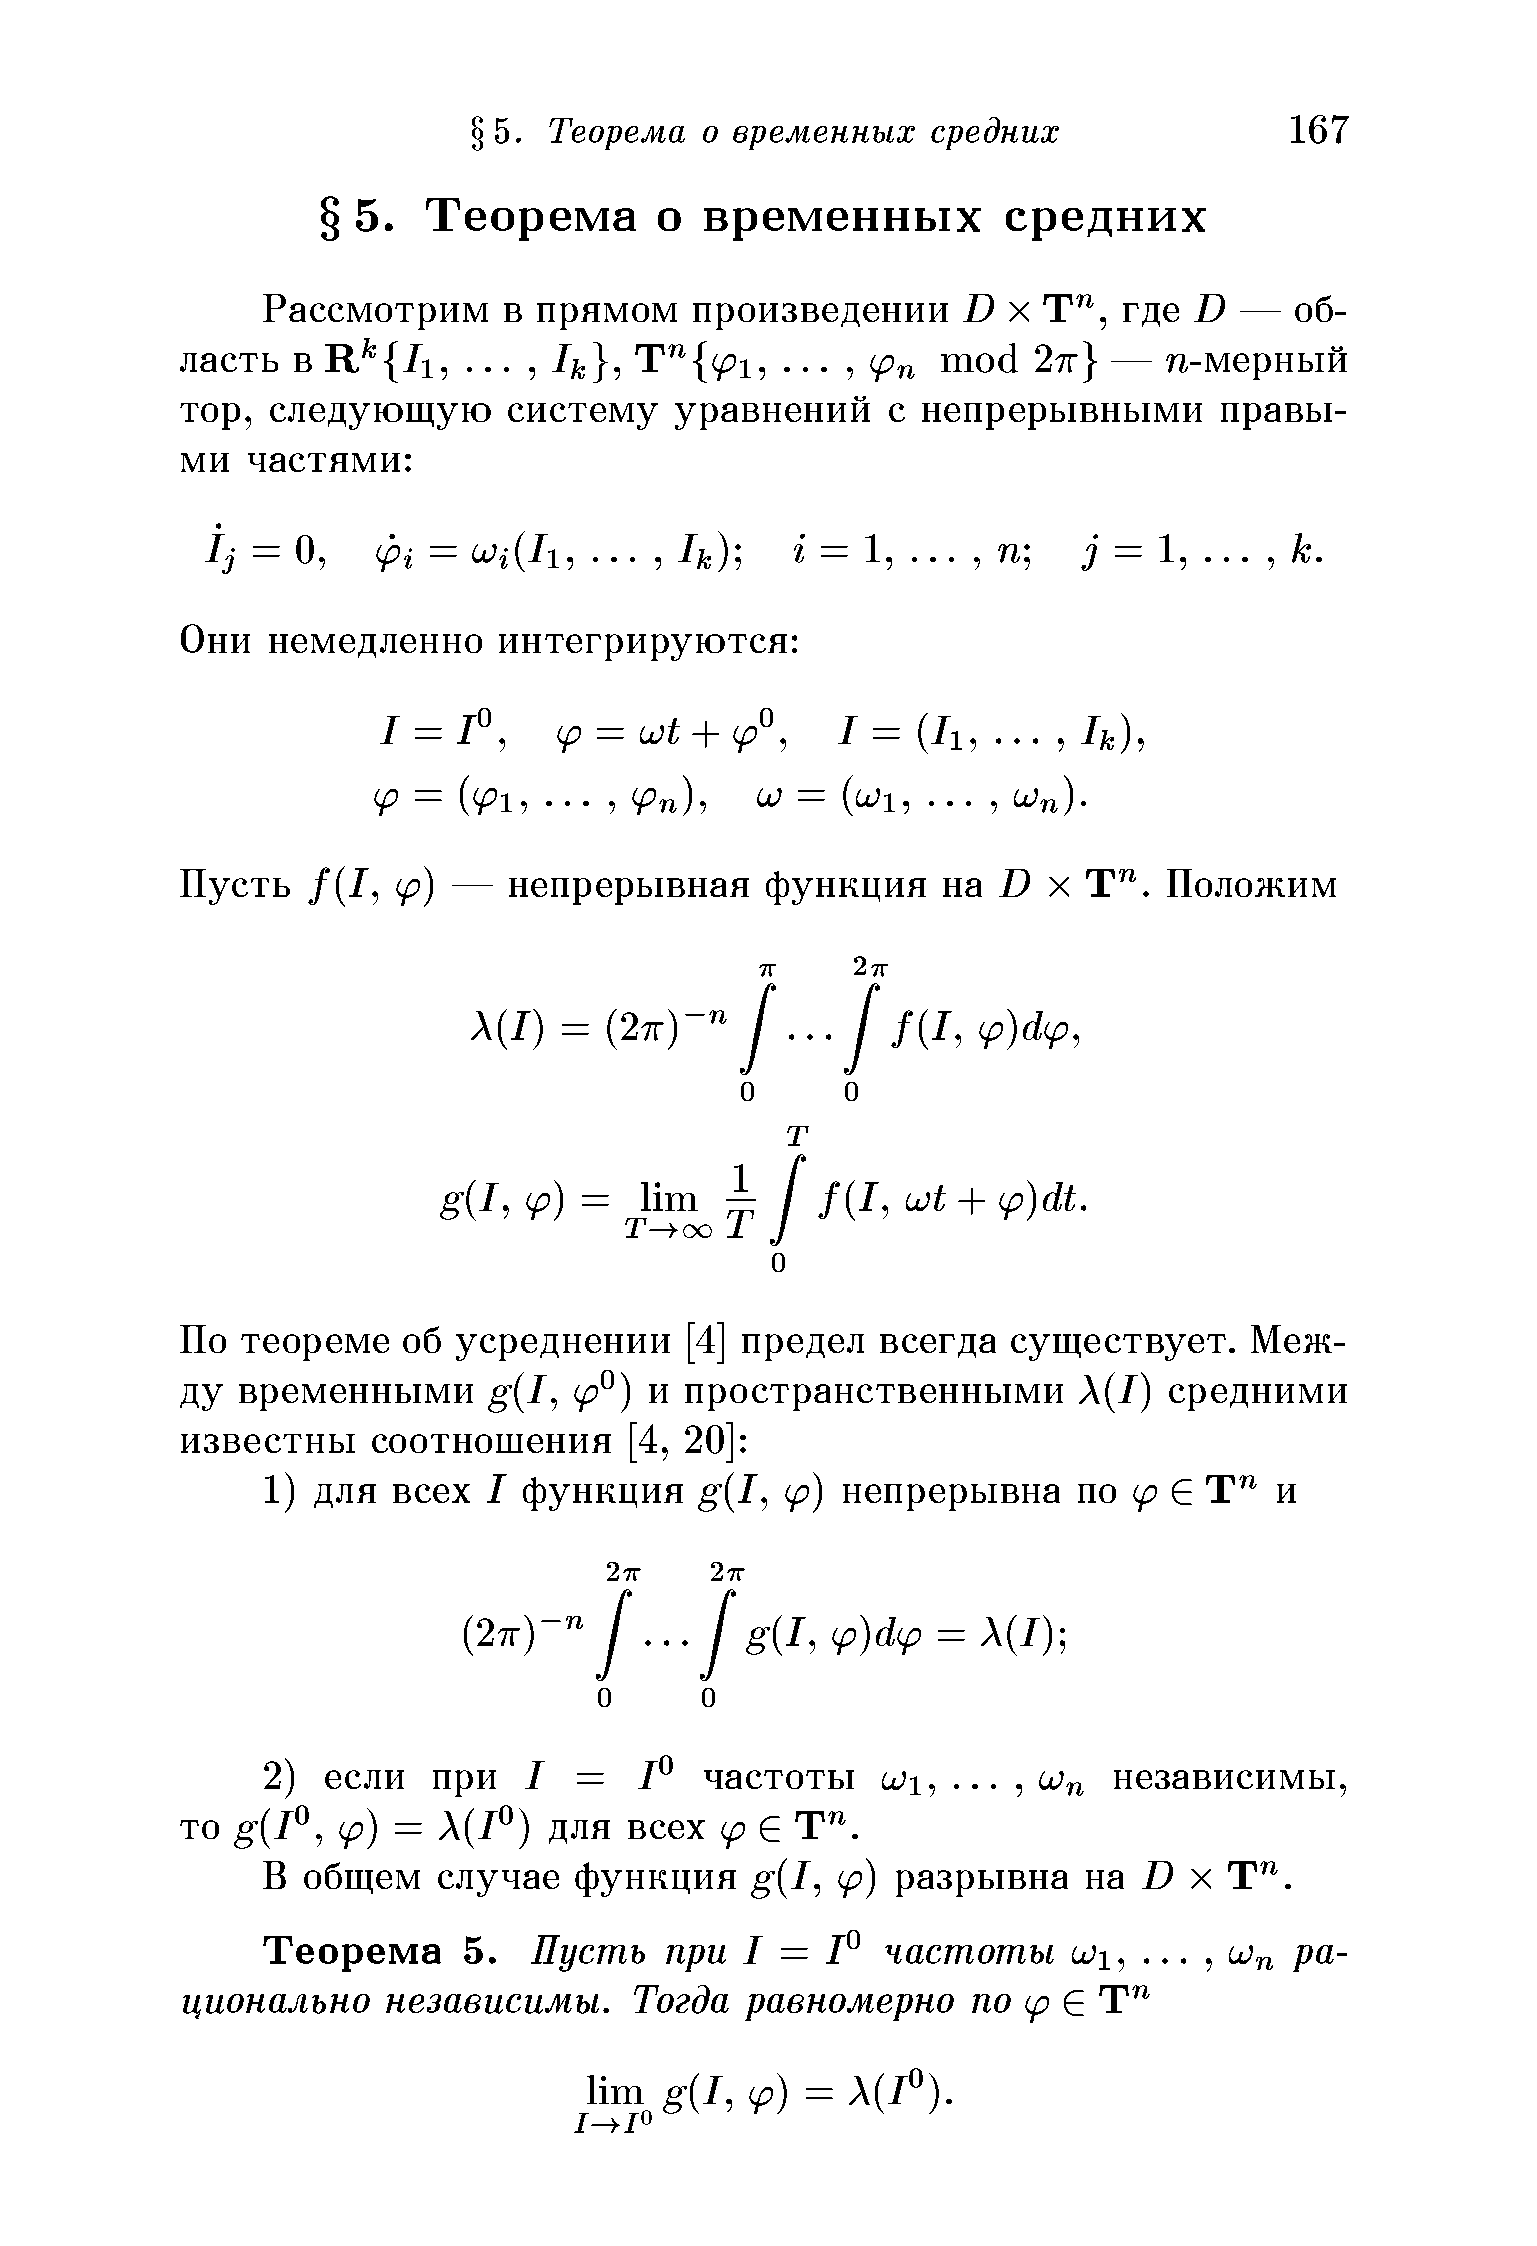 В общем случае функция g I, ср) разрывна на Д х Т .
